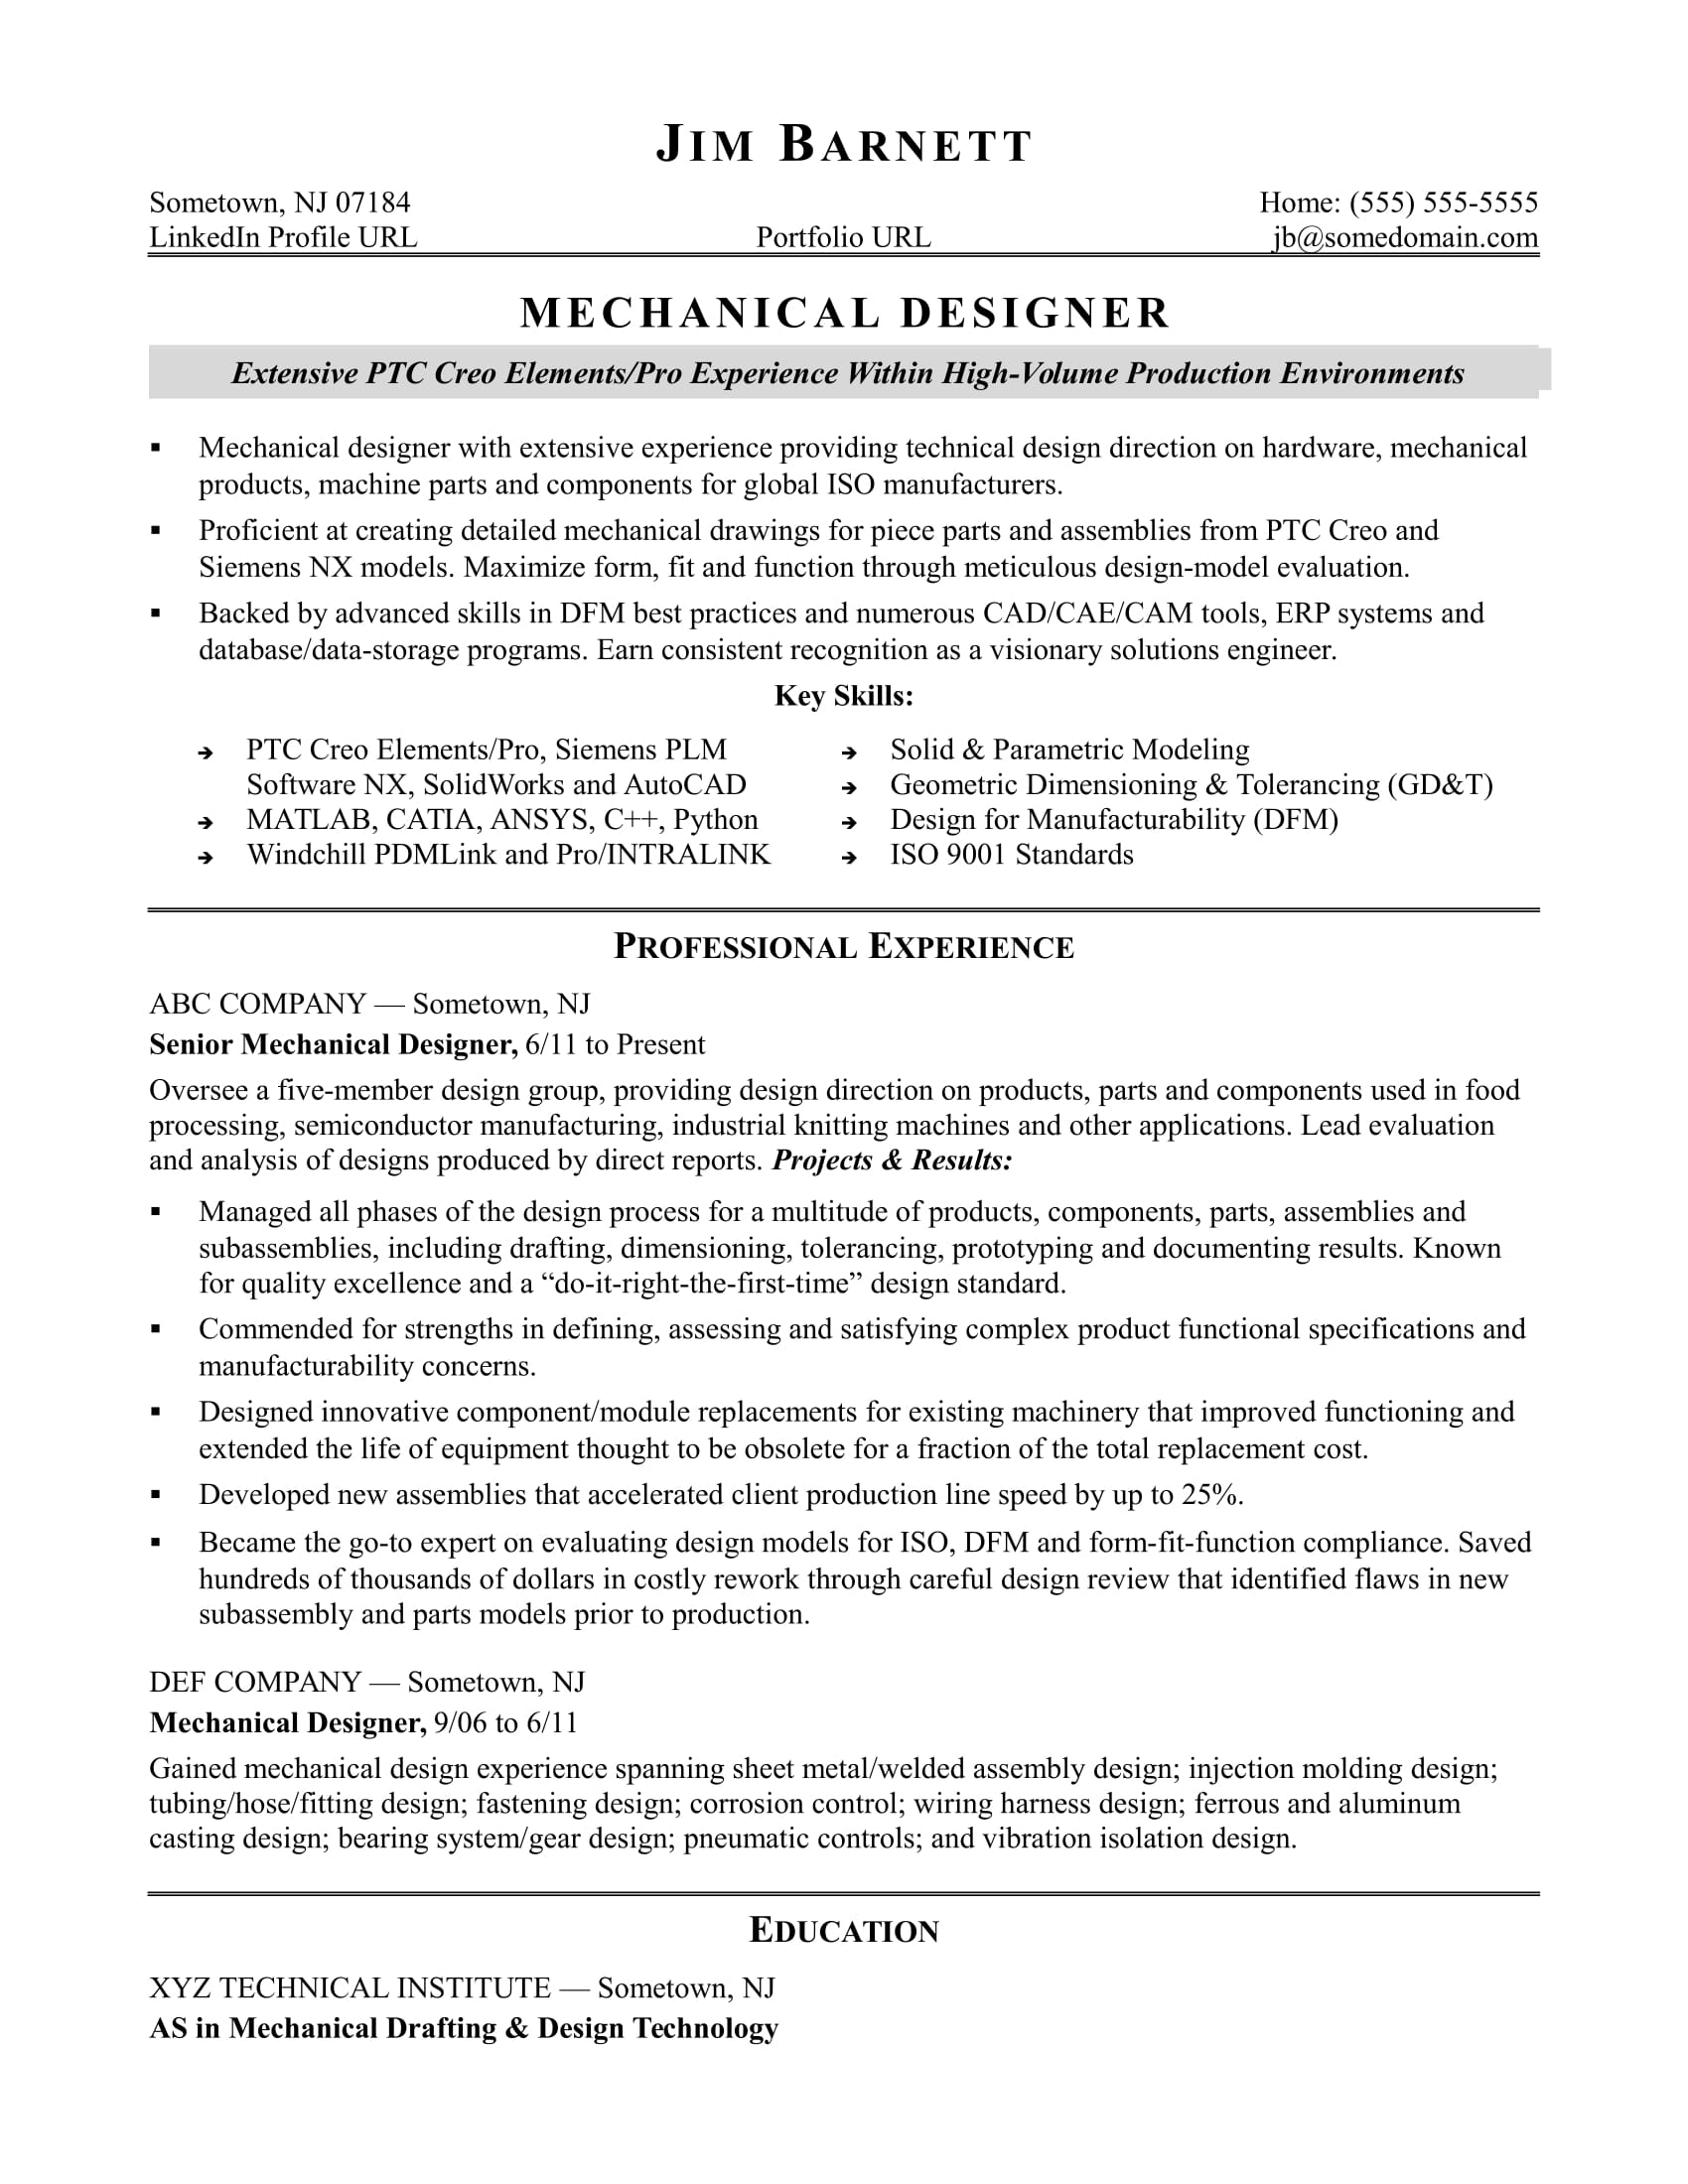 sample resume for an experienced mechanical designer